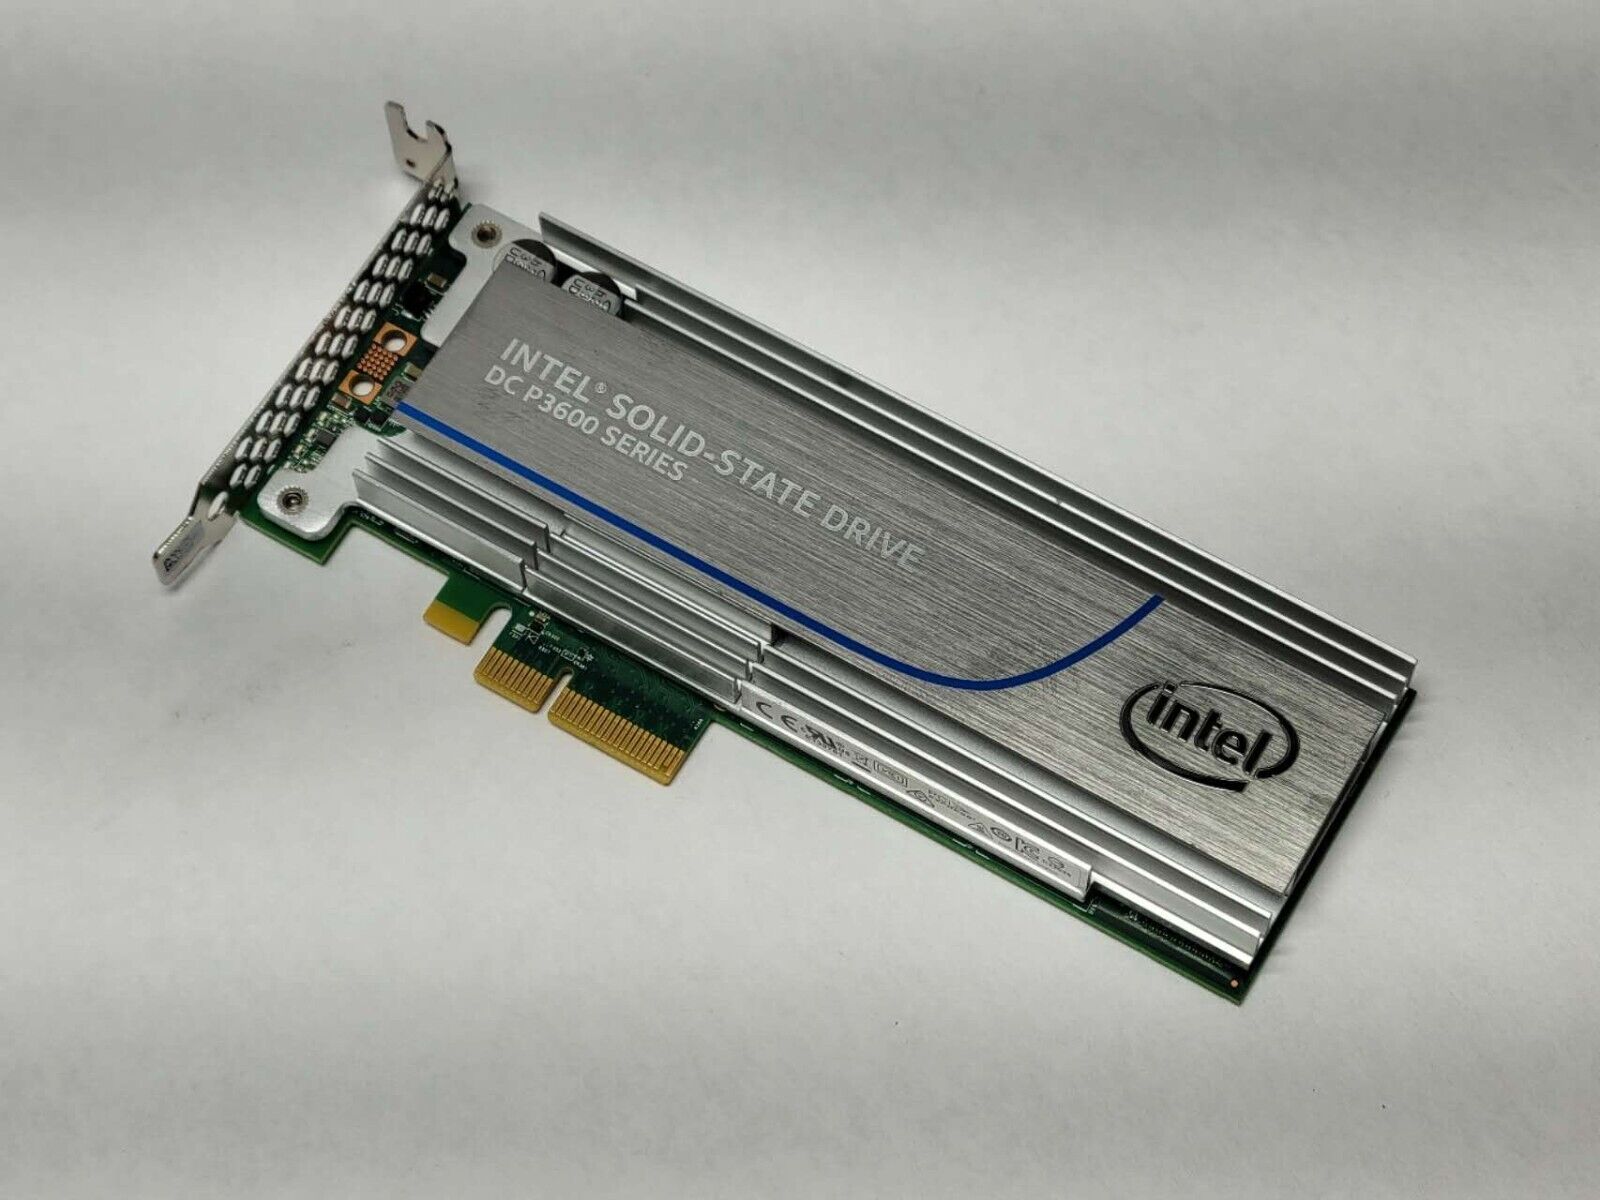 Intel SSD DC P3600 Series 1.6TB PCIe 3.0 x4 SSD SSDPEDME016T4S Low Profile